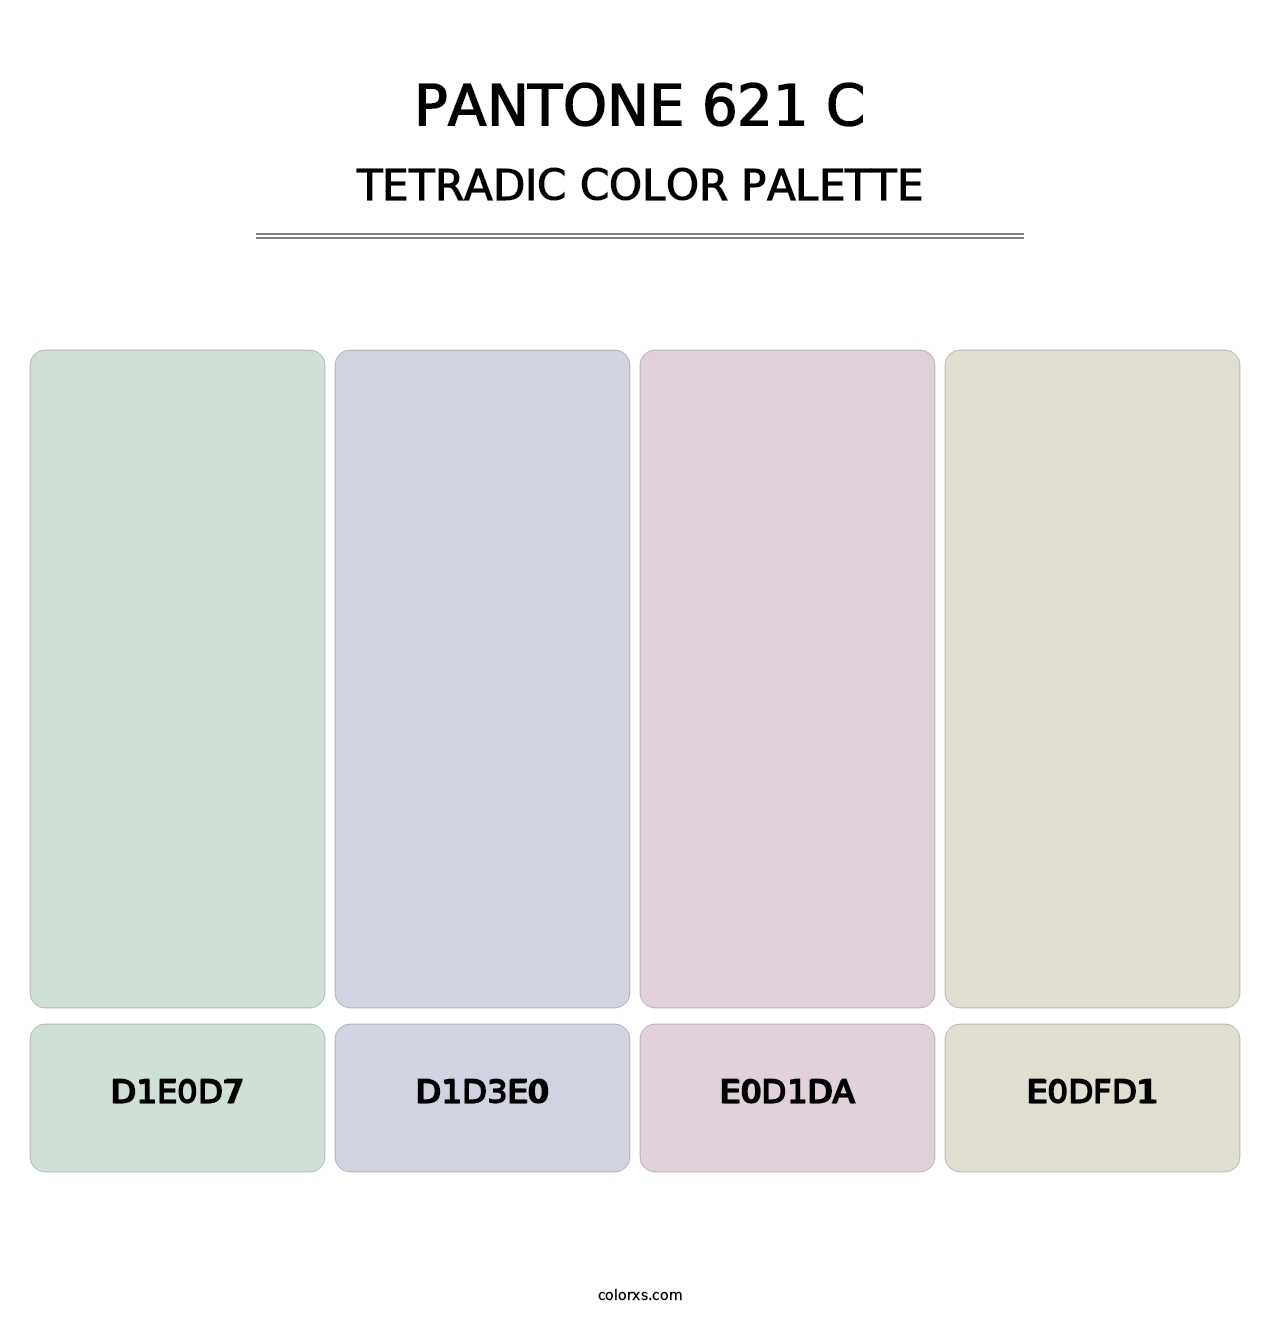 PANTONE 621 C - Tetradic Color Palette